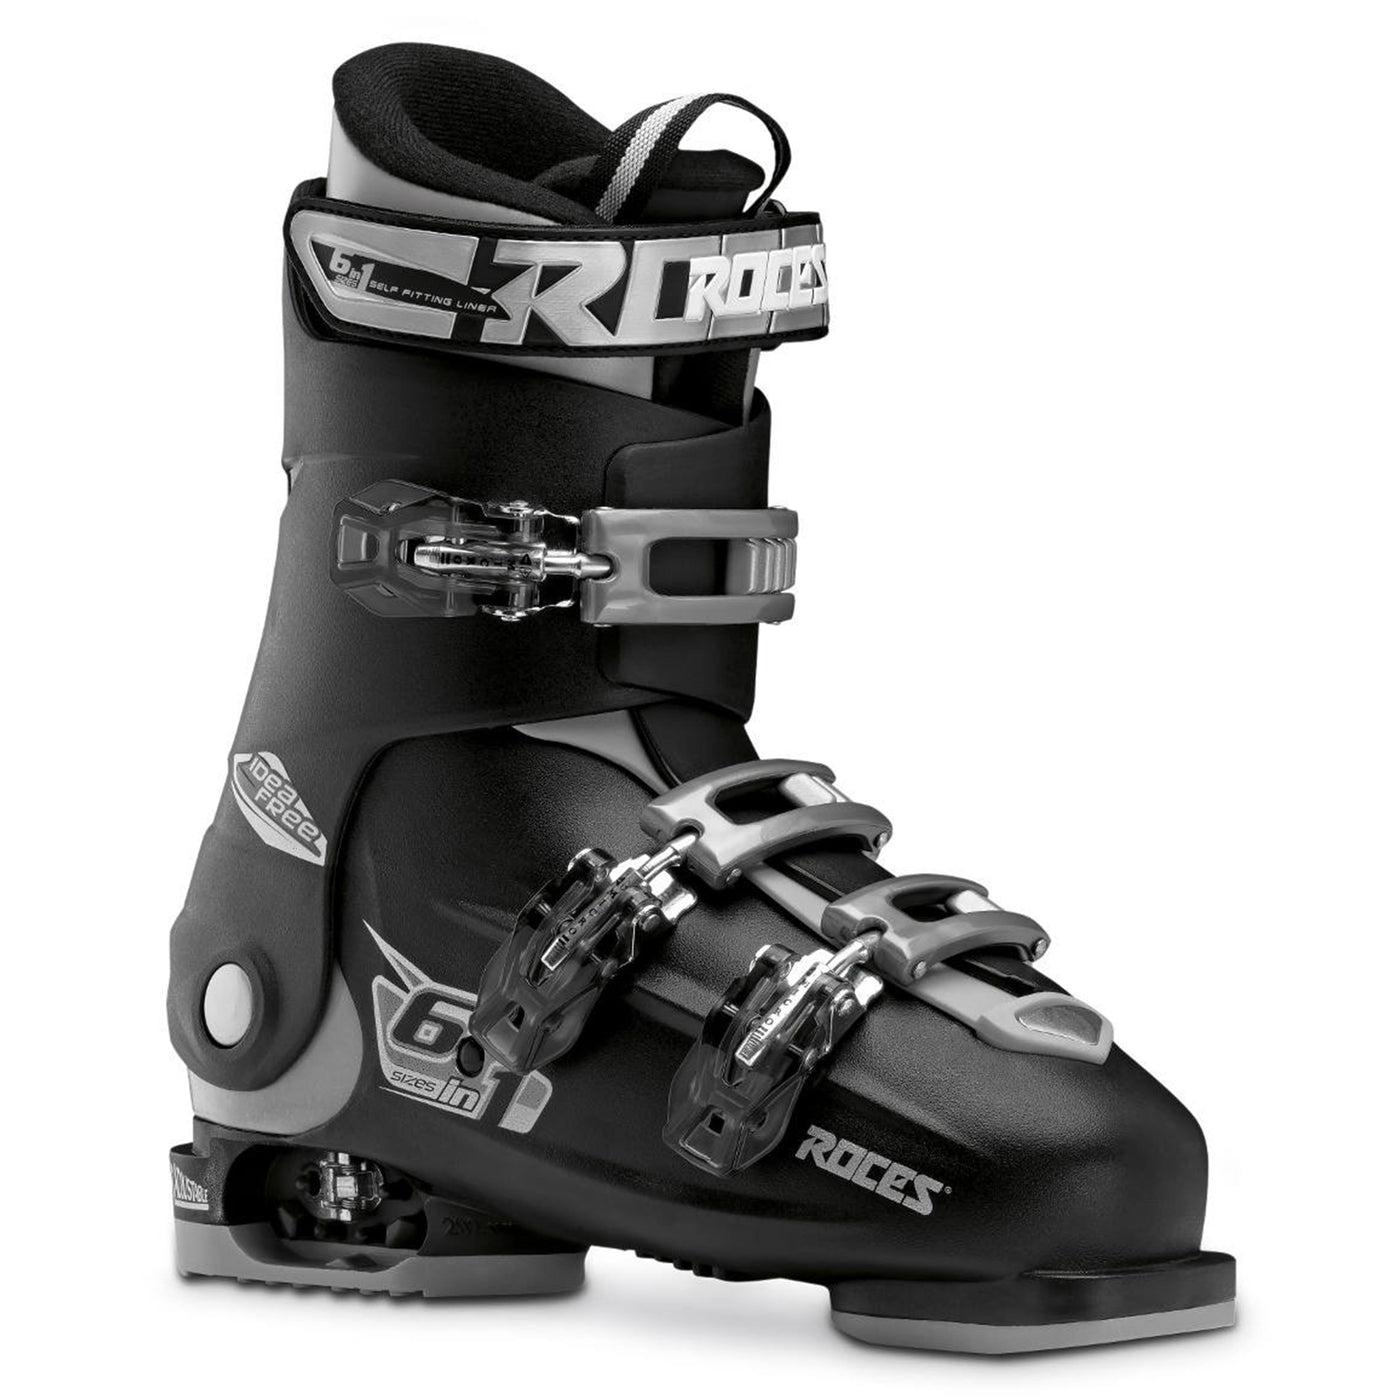 Roces IDEA Free Adjustable Youth Ski Boots | Size 22.5 - 25.5 MP - (Open Box Return) SKI BOOTS Roces Black/Silver  